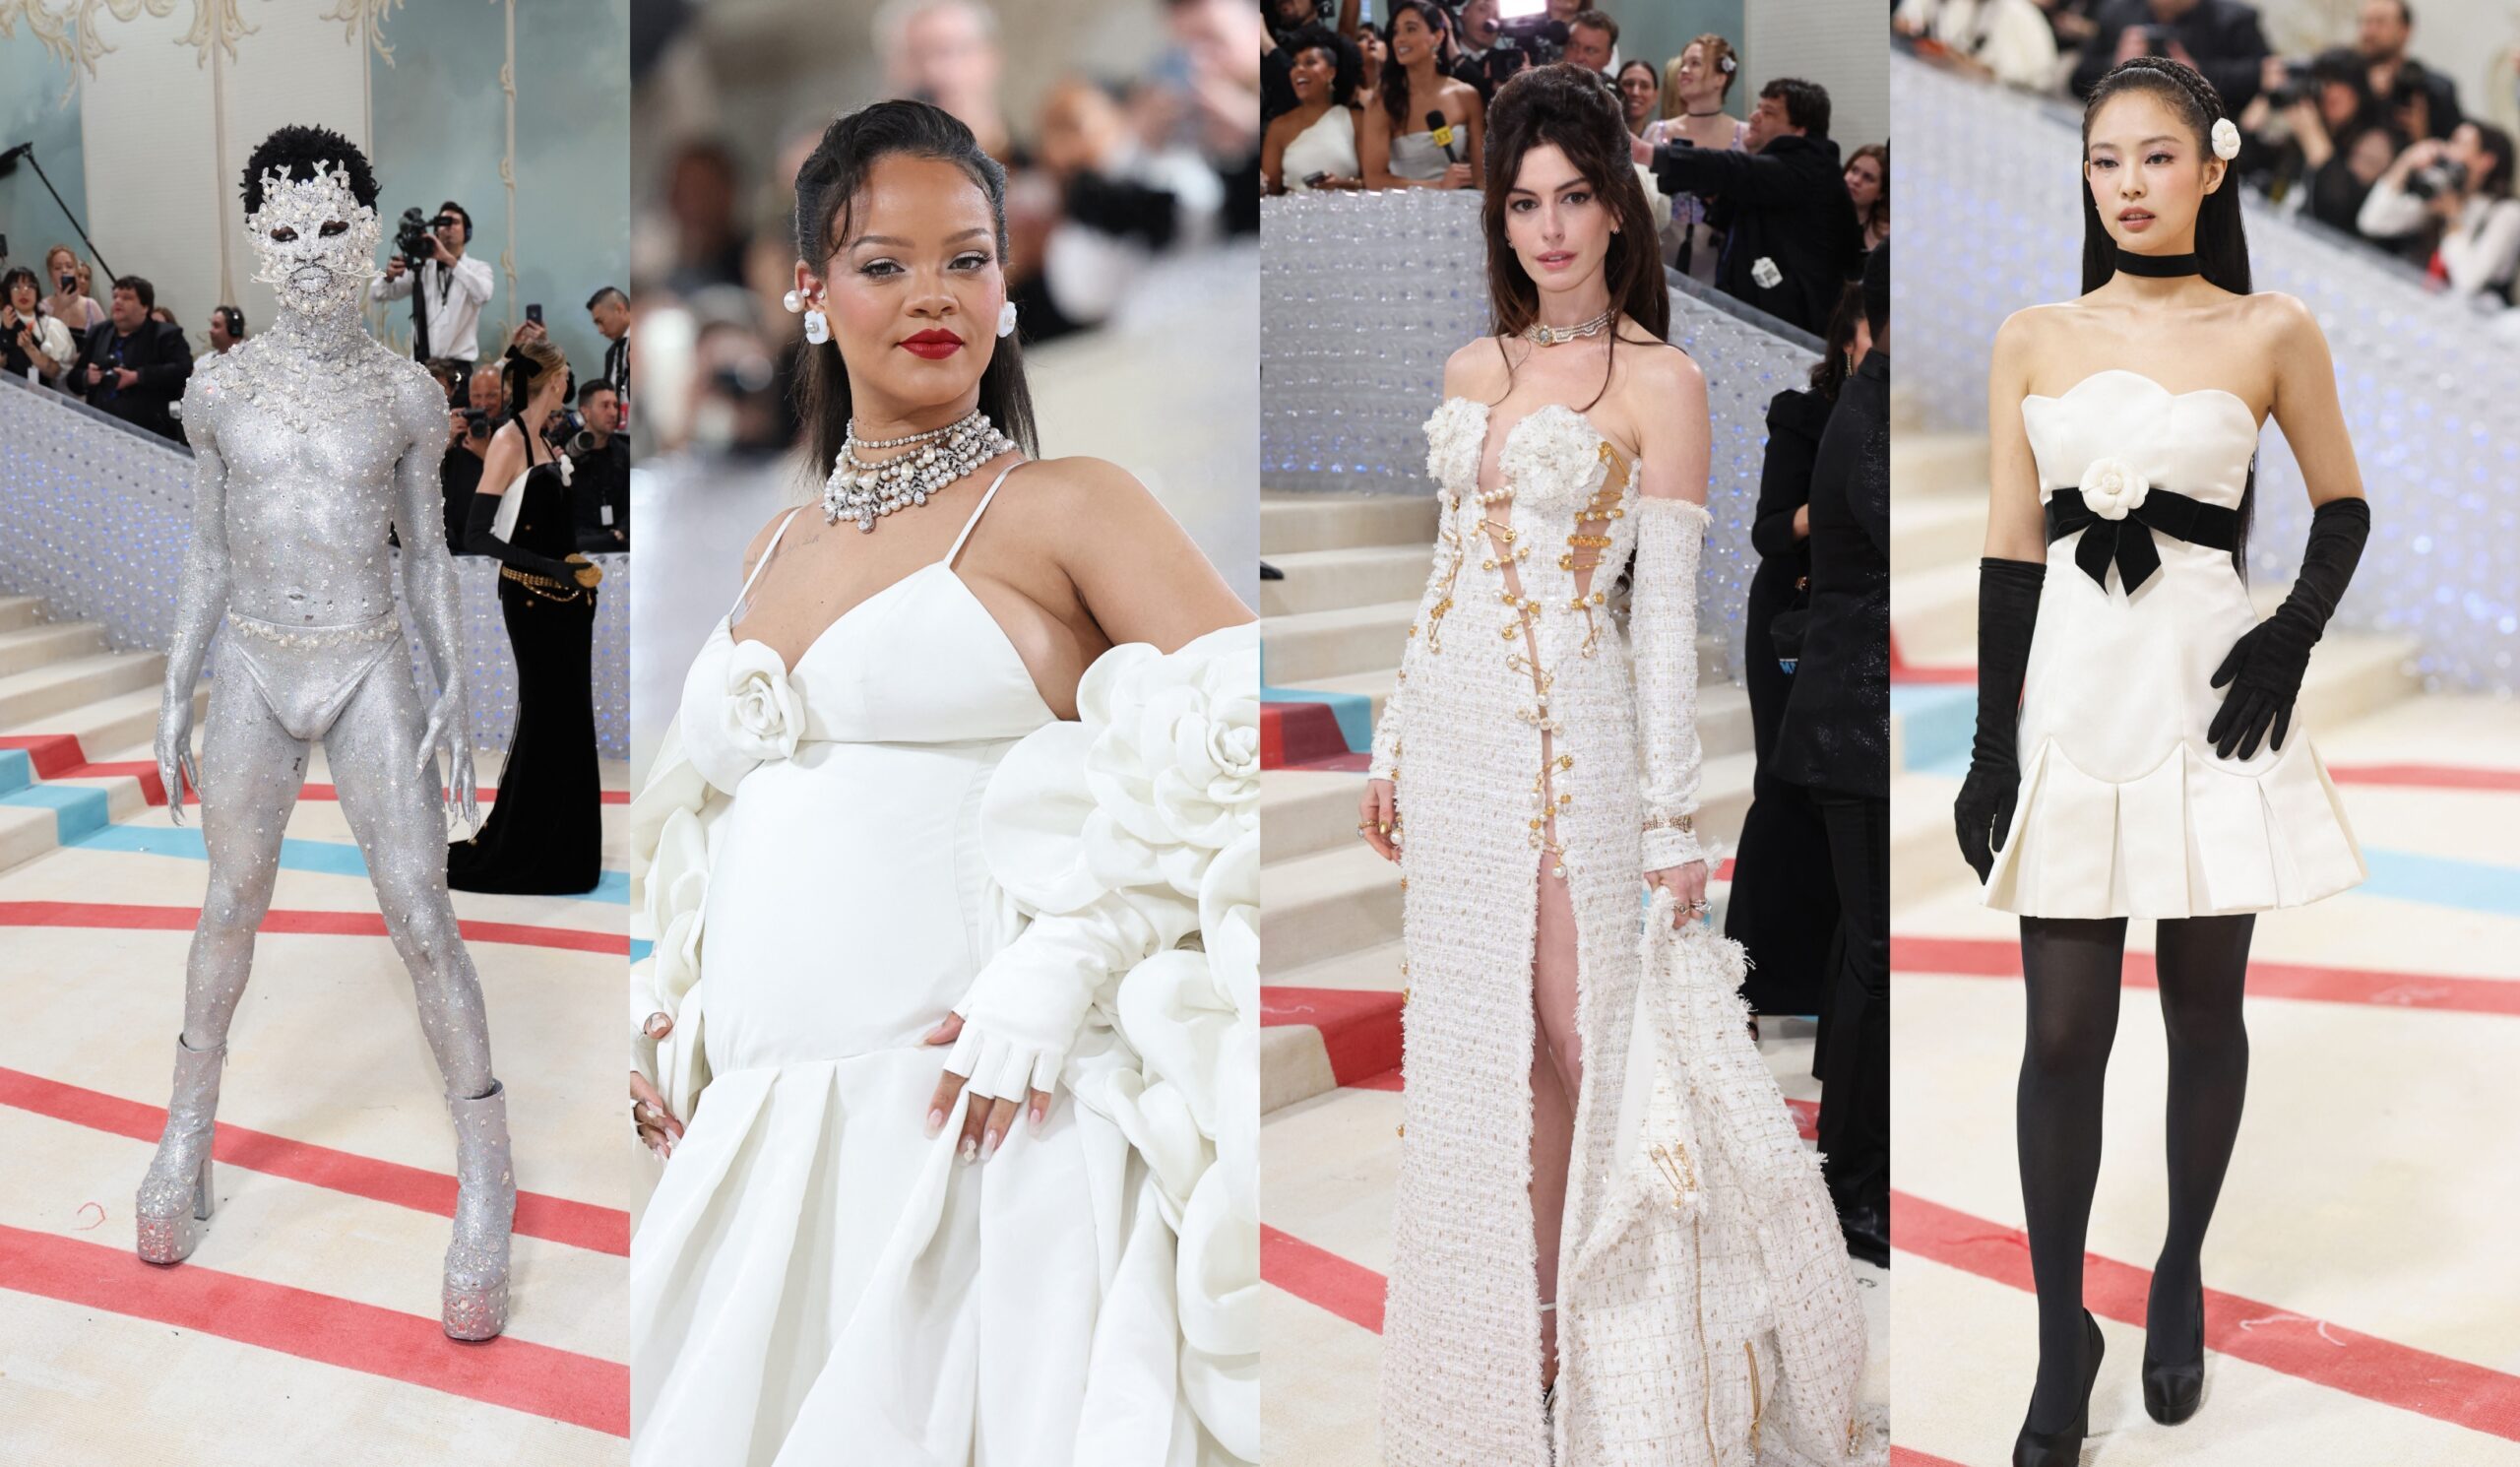 Met Gala 2023 Red Carpet Arrivals: See the Best Celebrity Looks